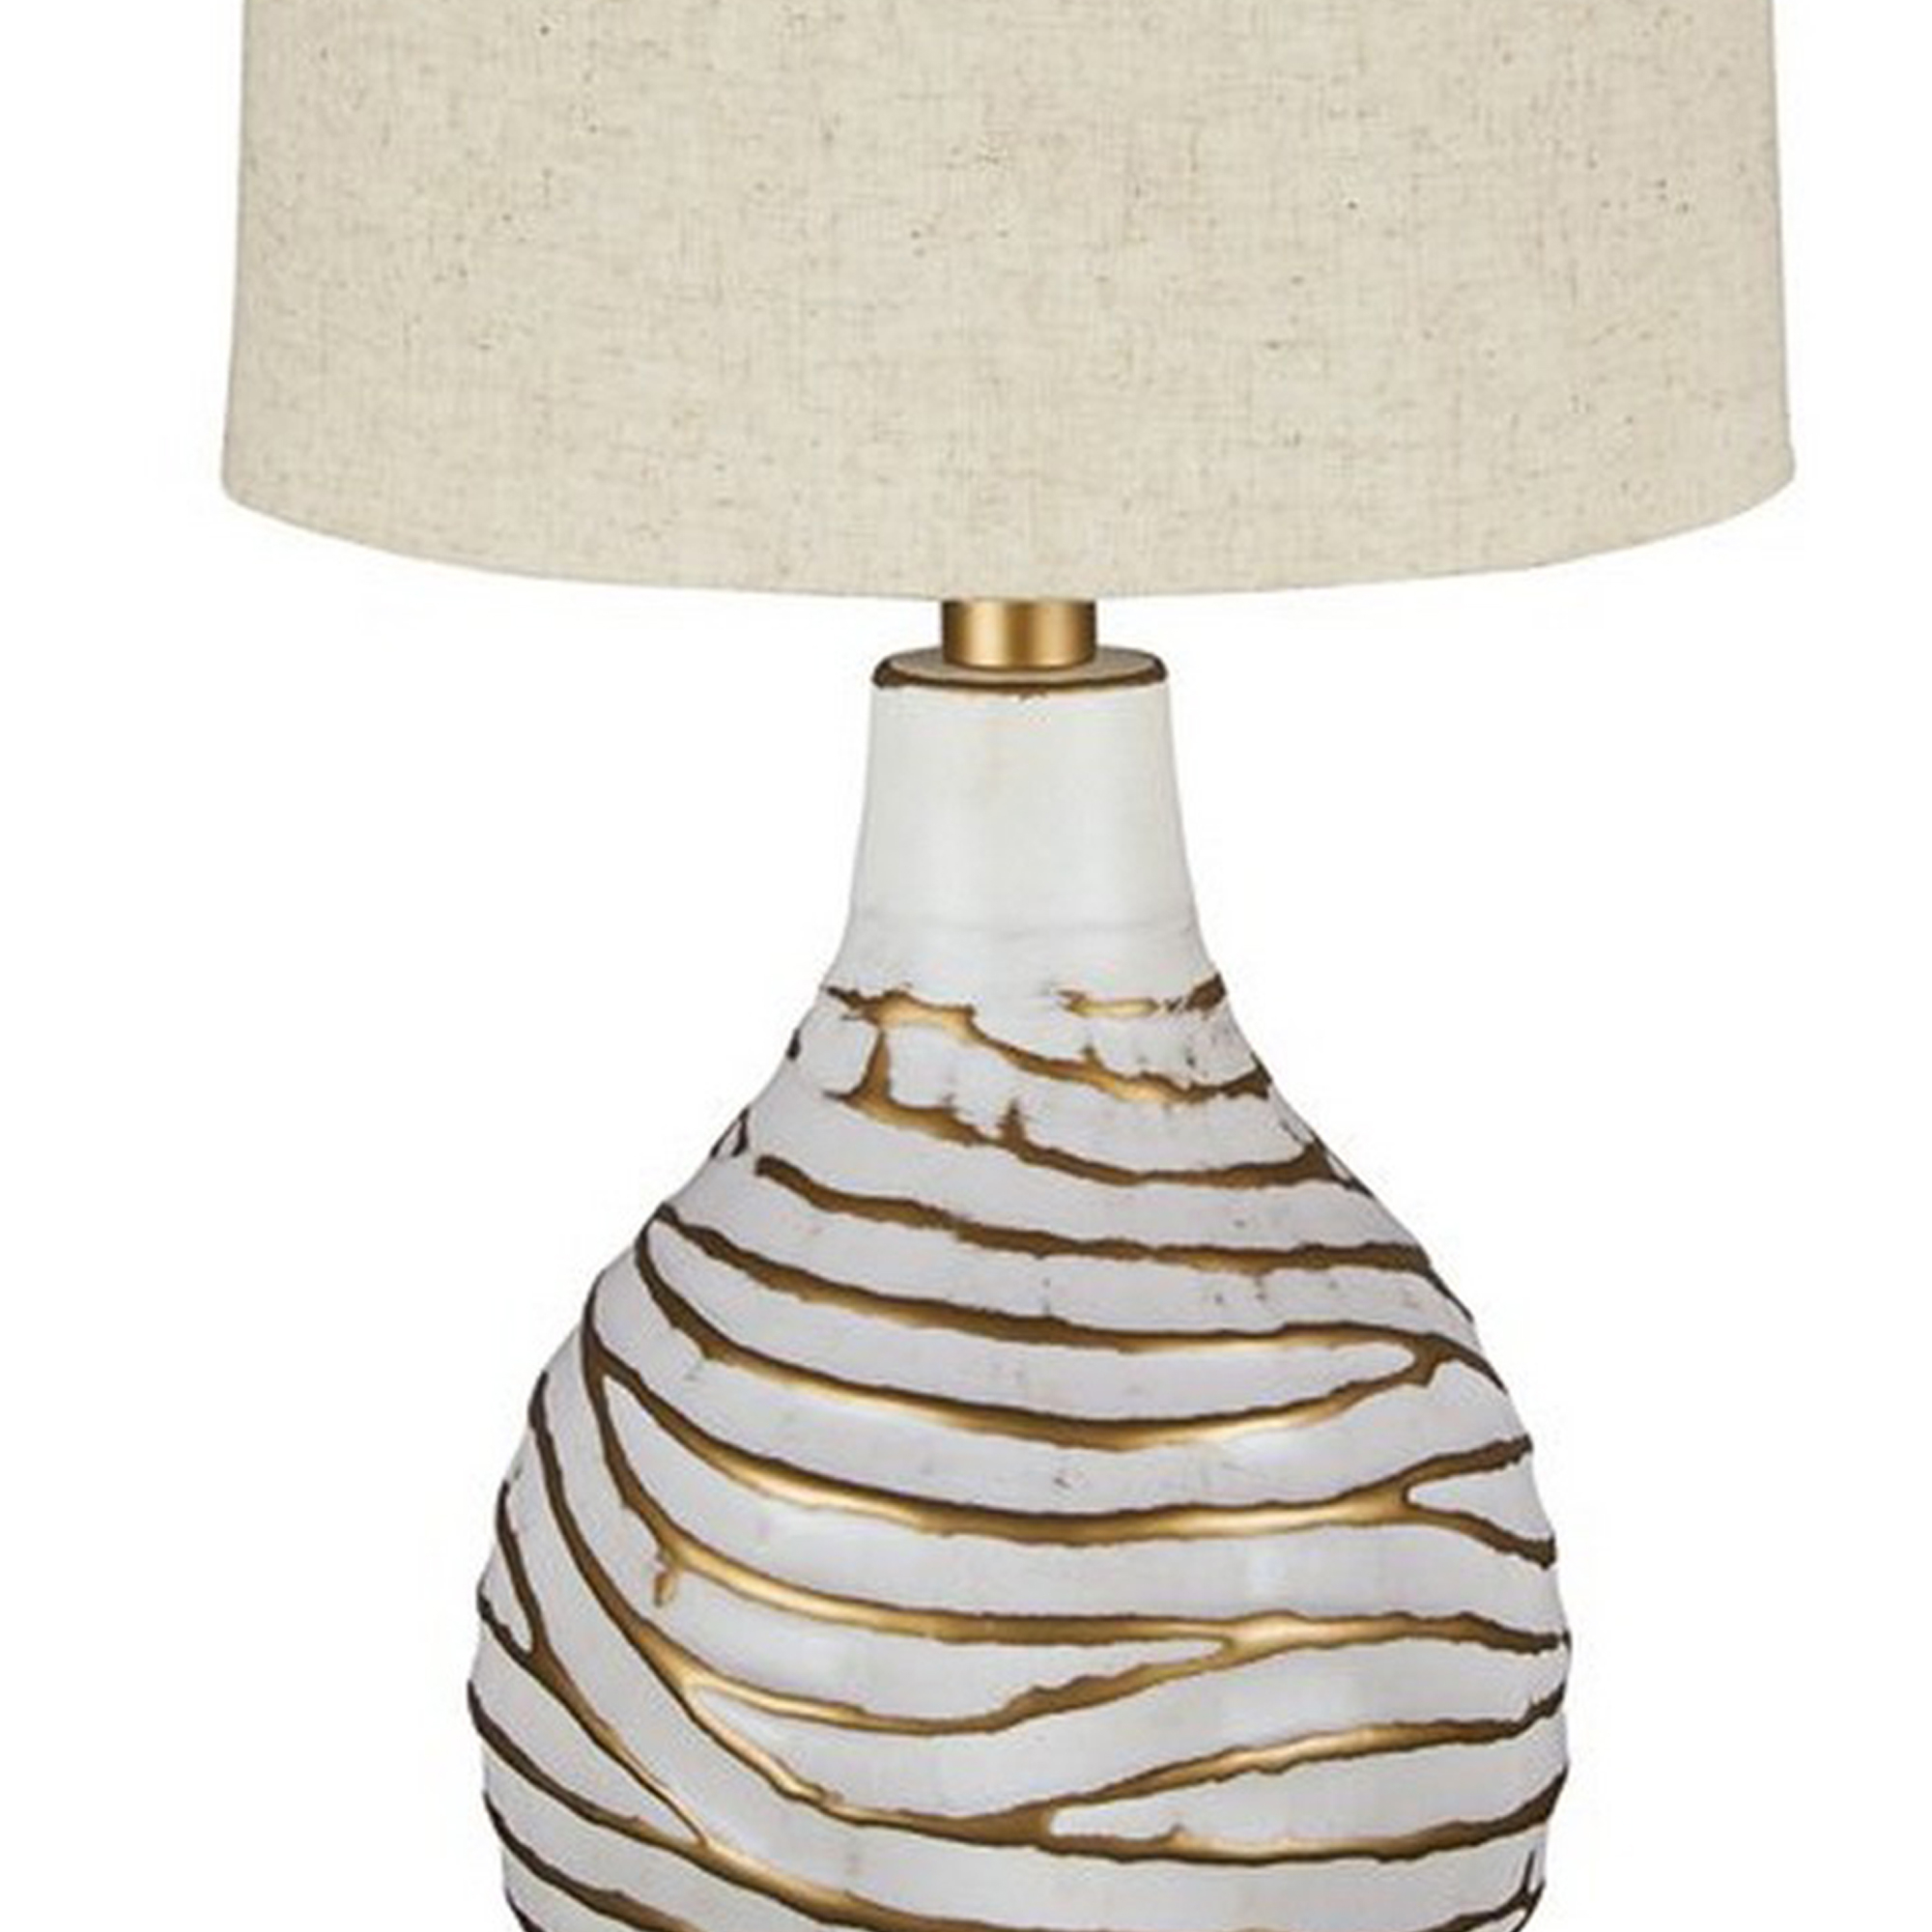 Pot Bellied Metal Table Lamp With Textured Golden Embellishment, White- Saltoro Sherpi